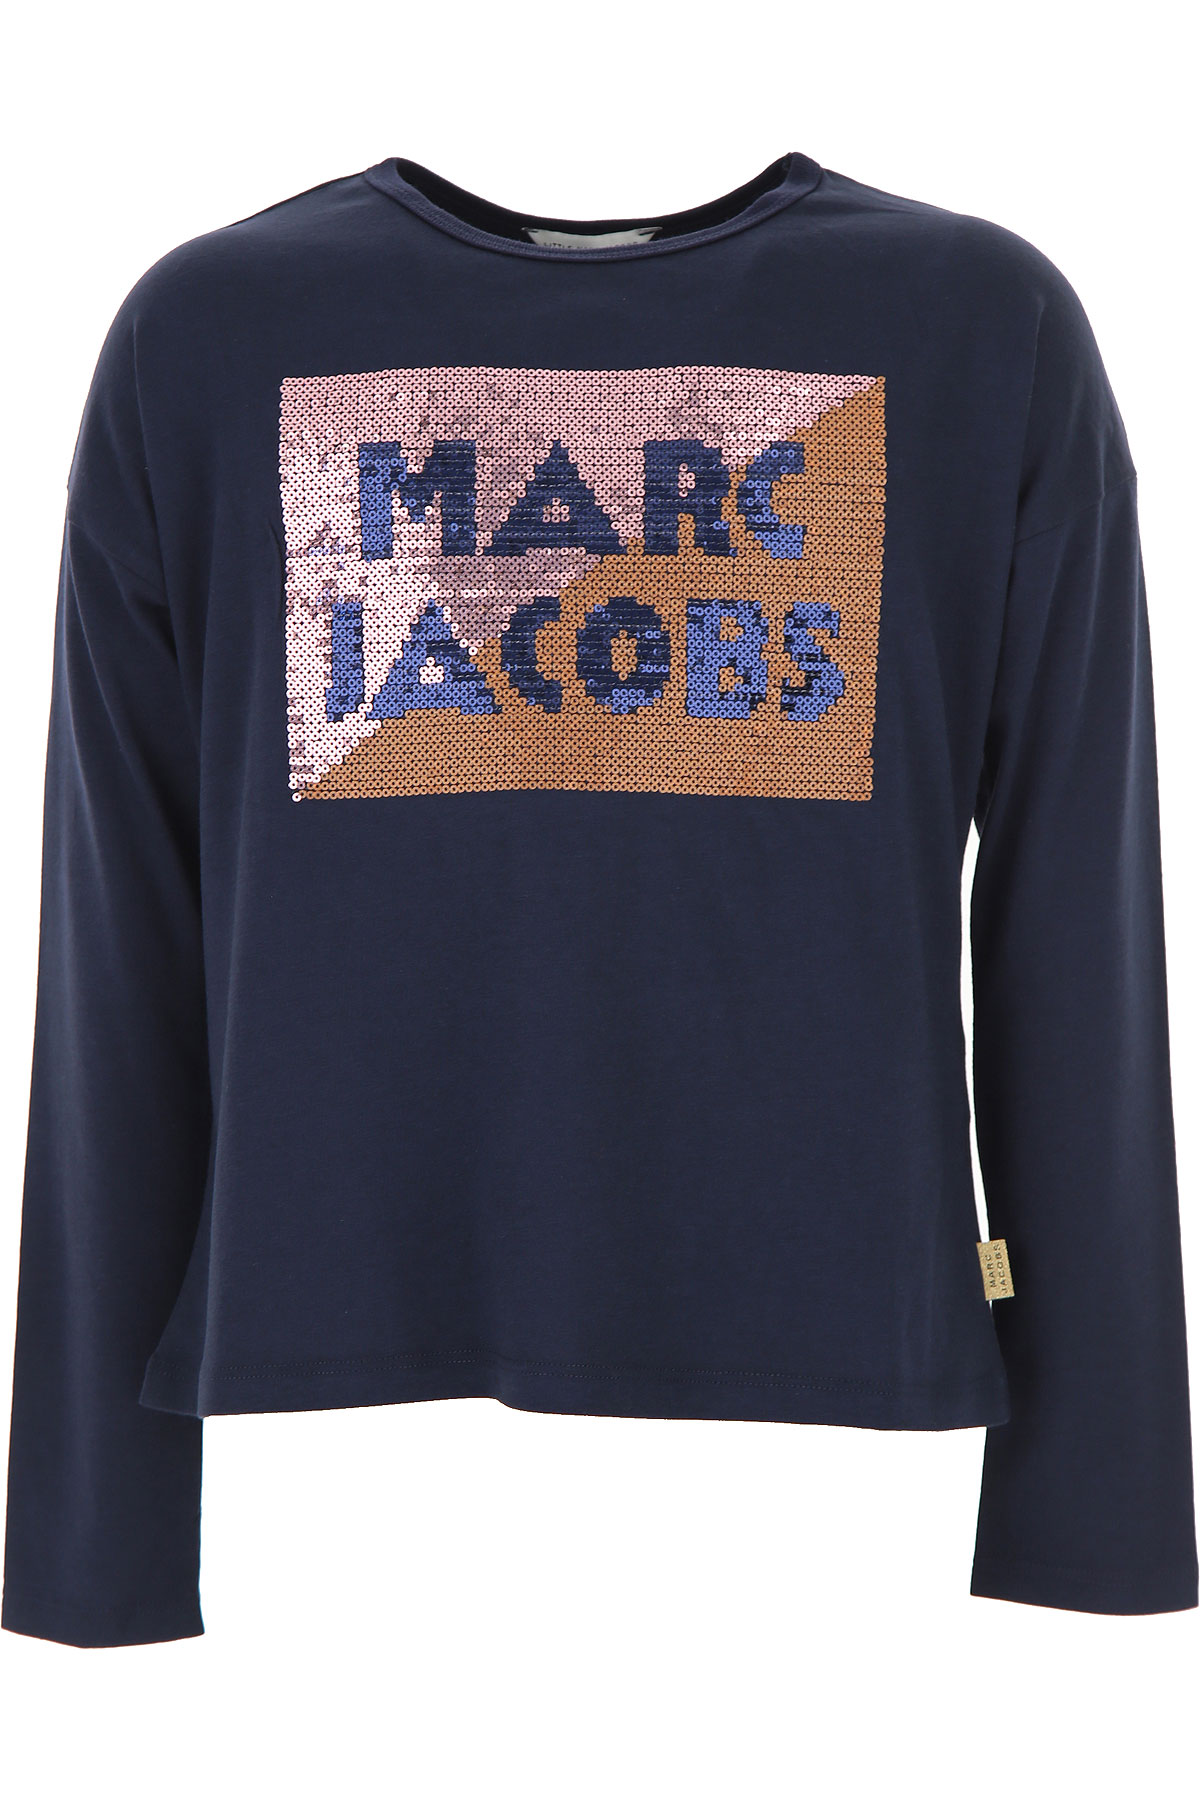 Marc Jacobs Kinder T-Shirt für Mädchen Günstig im Sale, Blau, Baumwolle, 2017, 10Y 12Y 14Y 8Y